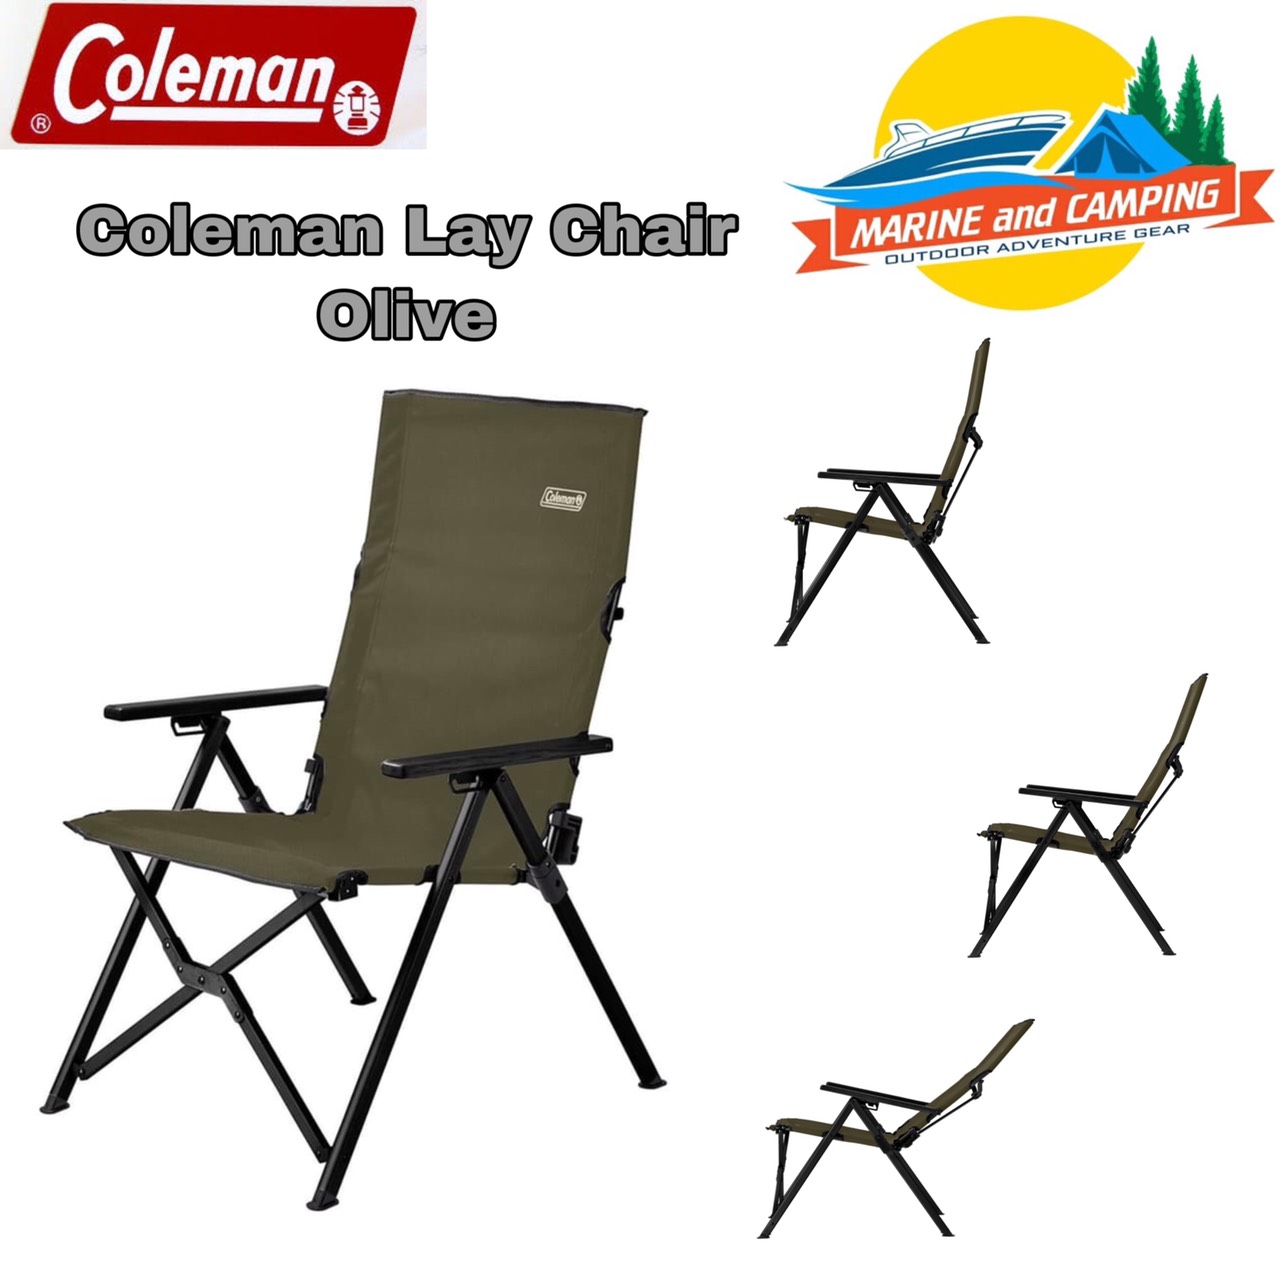 Coleman lay chair olive เก้าอี้พับปรับระดับ